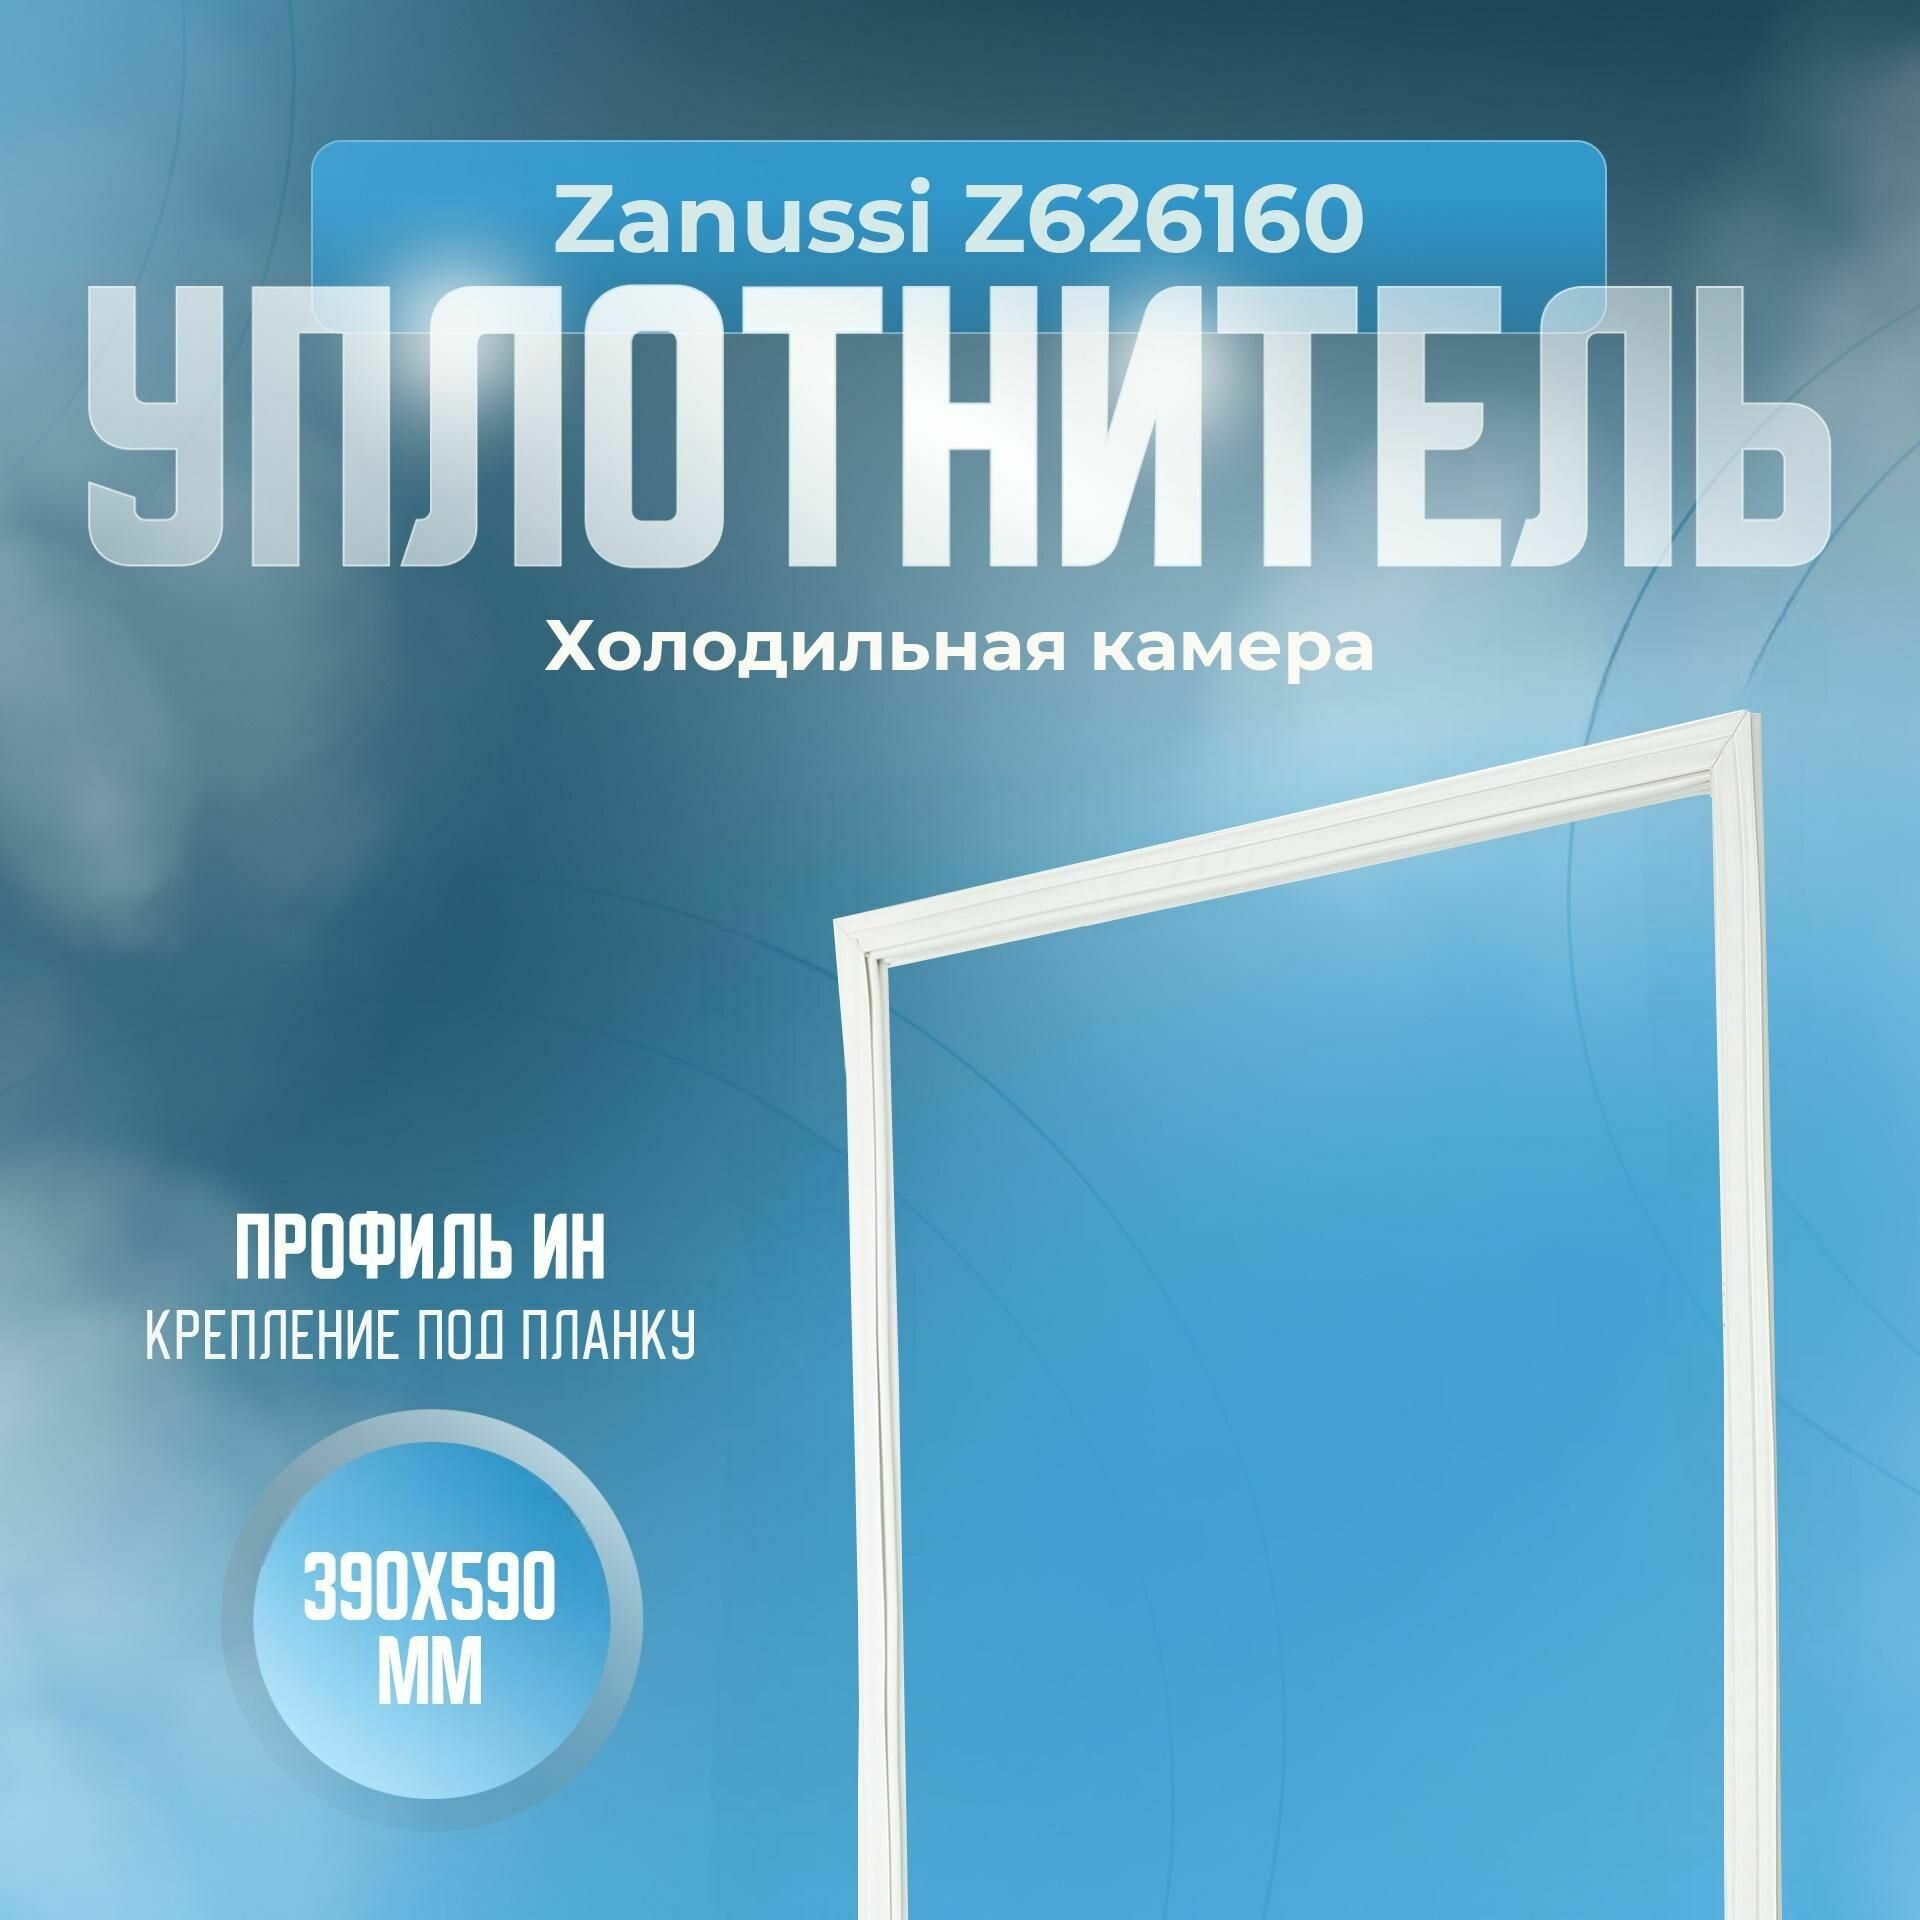 Уплотнитель Zanussi Z626160. х. к, Размер - 390х590 мм. ИН